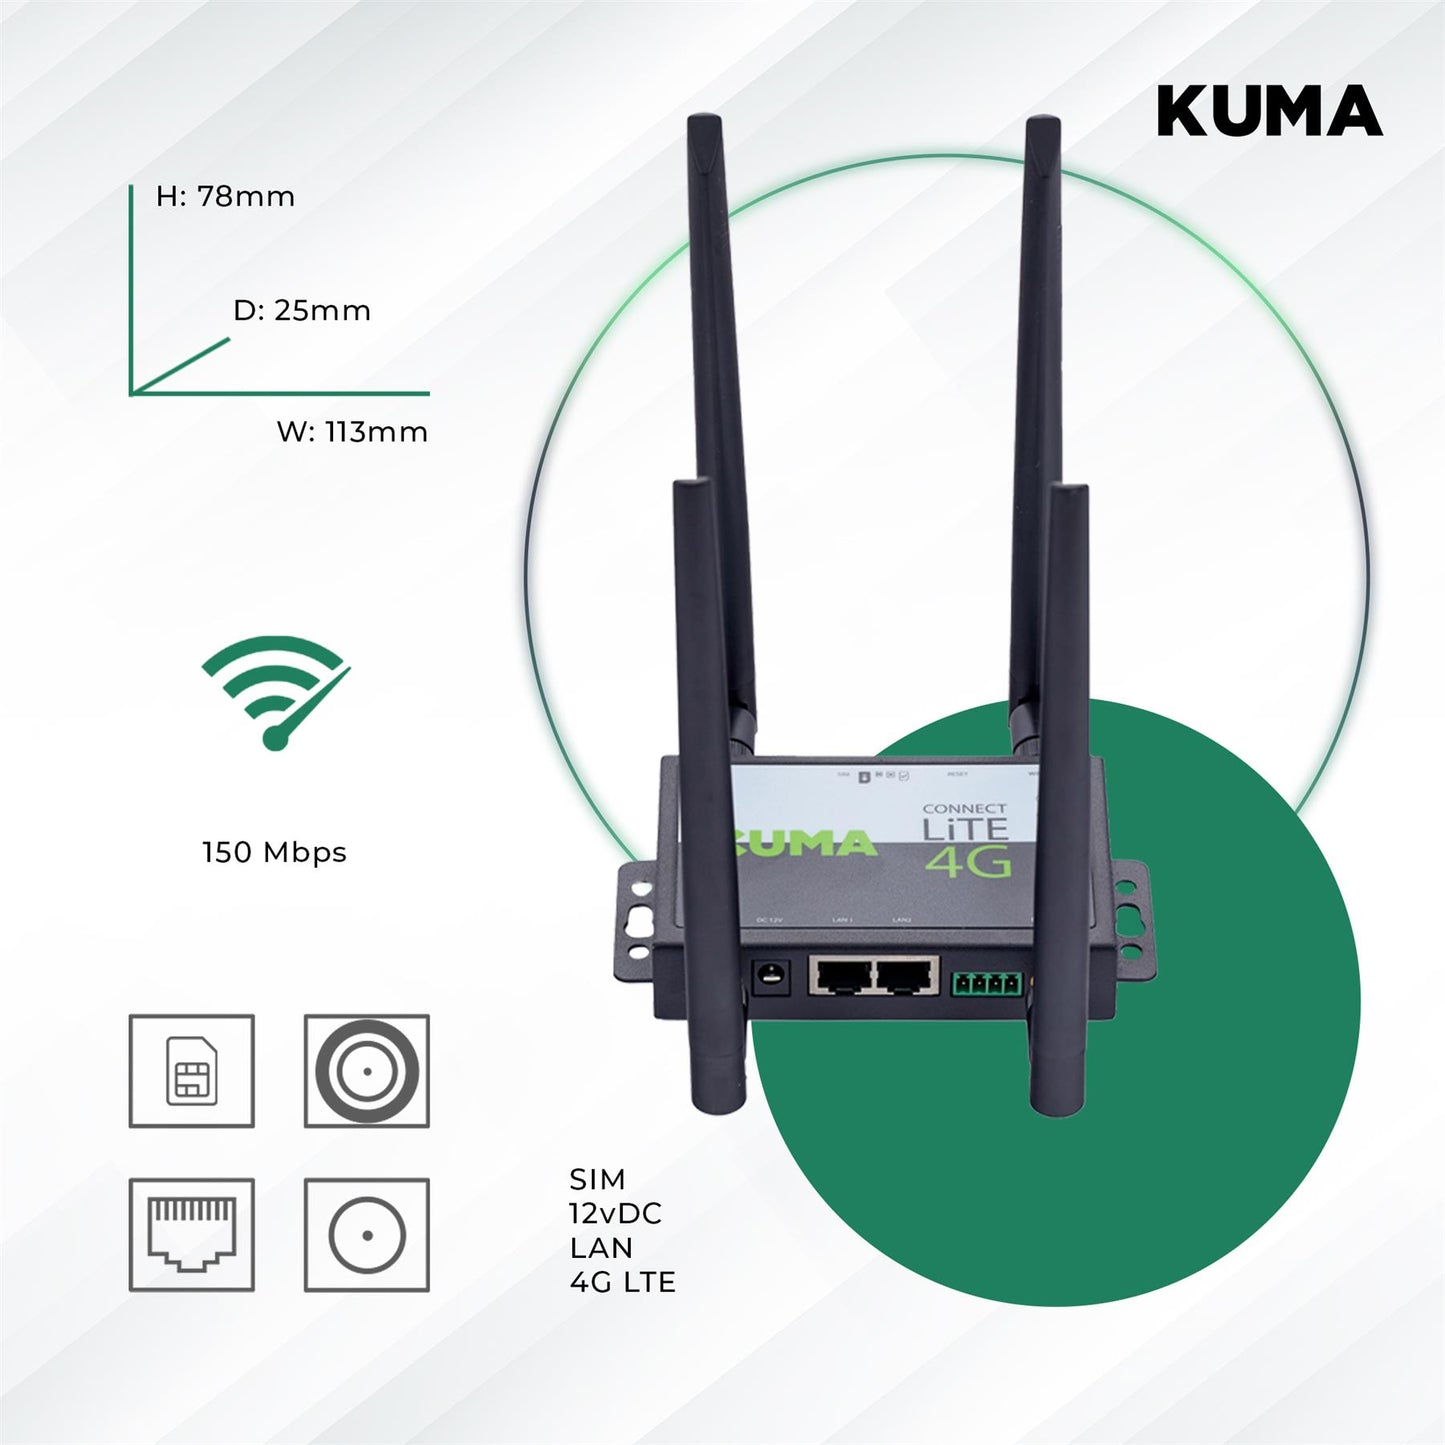 KUMA CONNECT LiTE Mobile Unlocked SIM 4G Router Wifi Booster Kit - Hotspot Wi-fi High Power LTE Signal Antenna for House Garden Office Caravan Motorhome Boat - Portable Internet Wireless Wi Fi Device